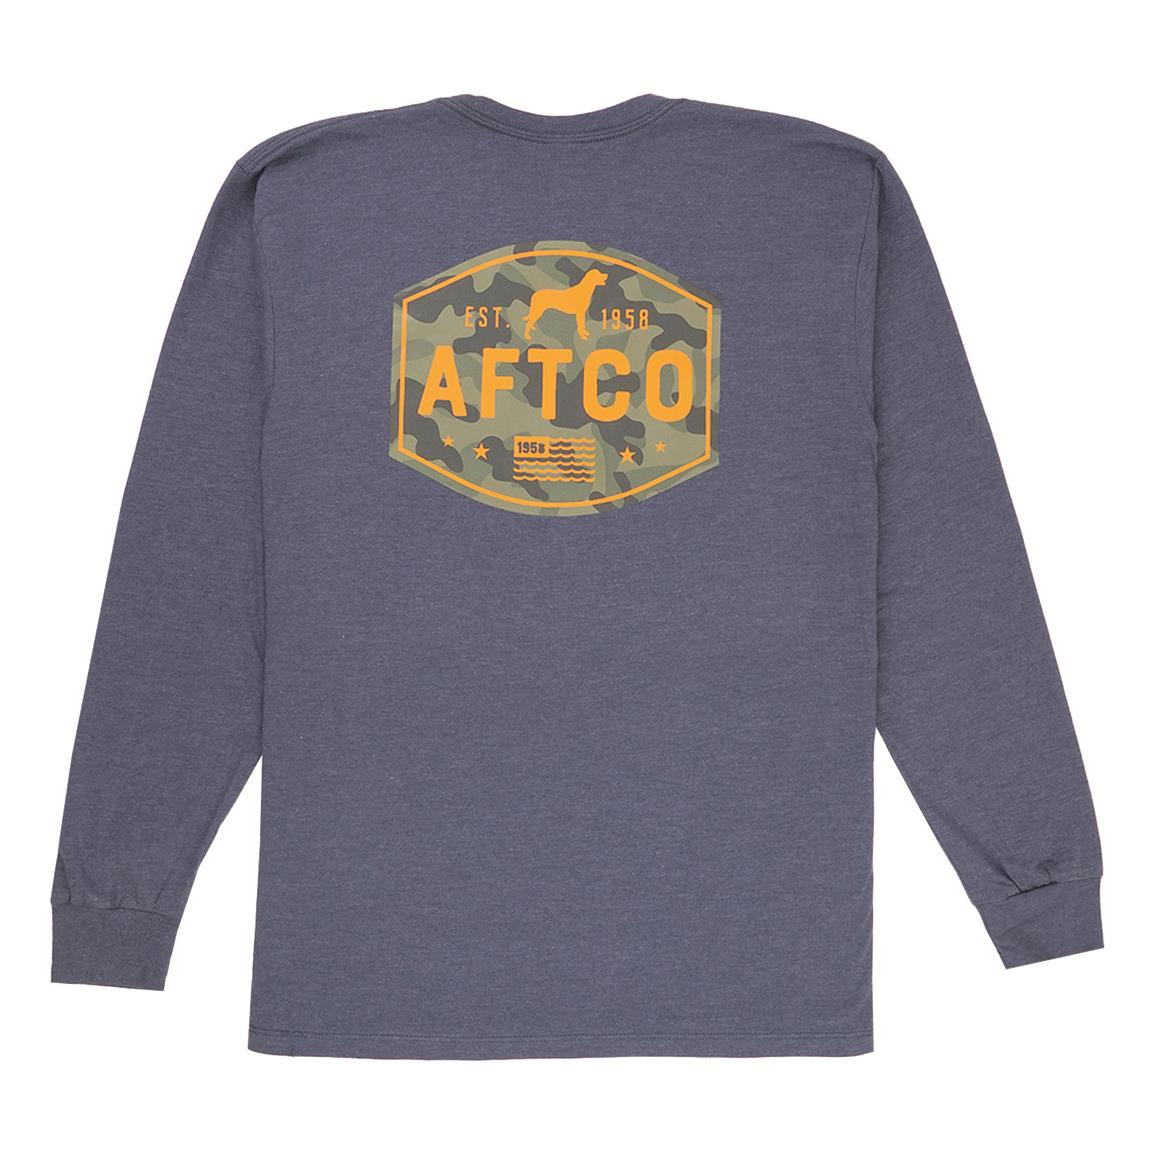 Aftco Men's Best Friend Long Sleeve T-Shirt, Midnight Heather